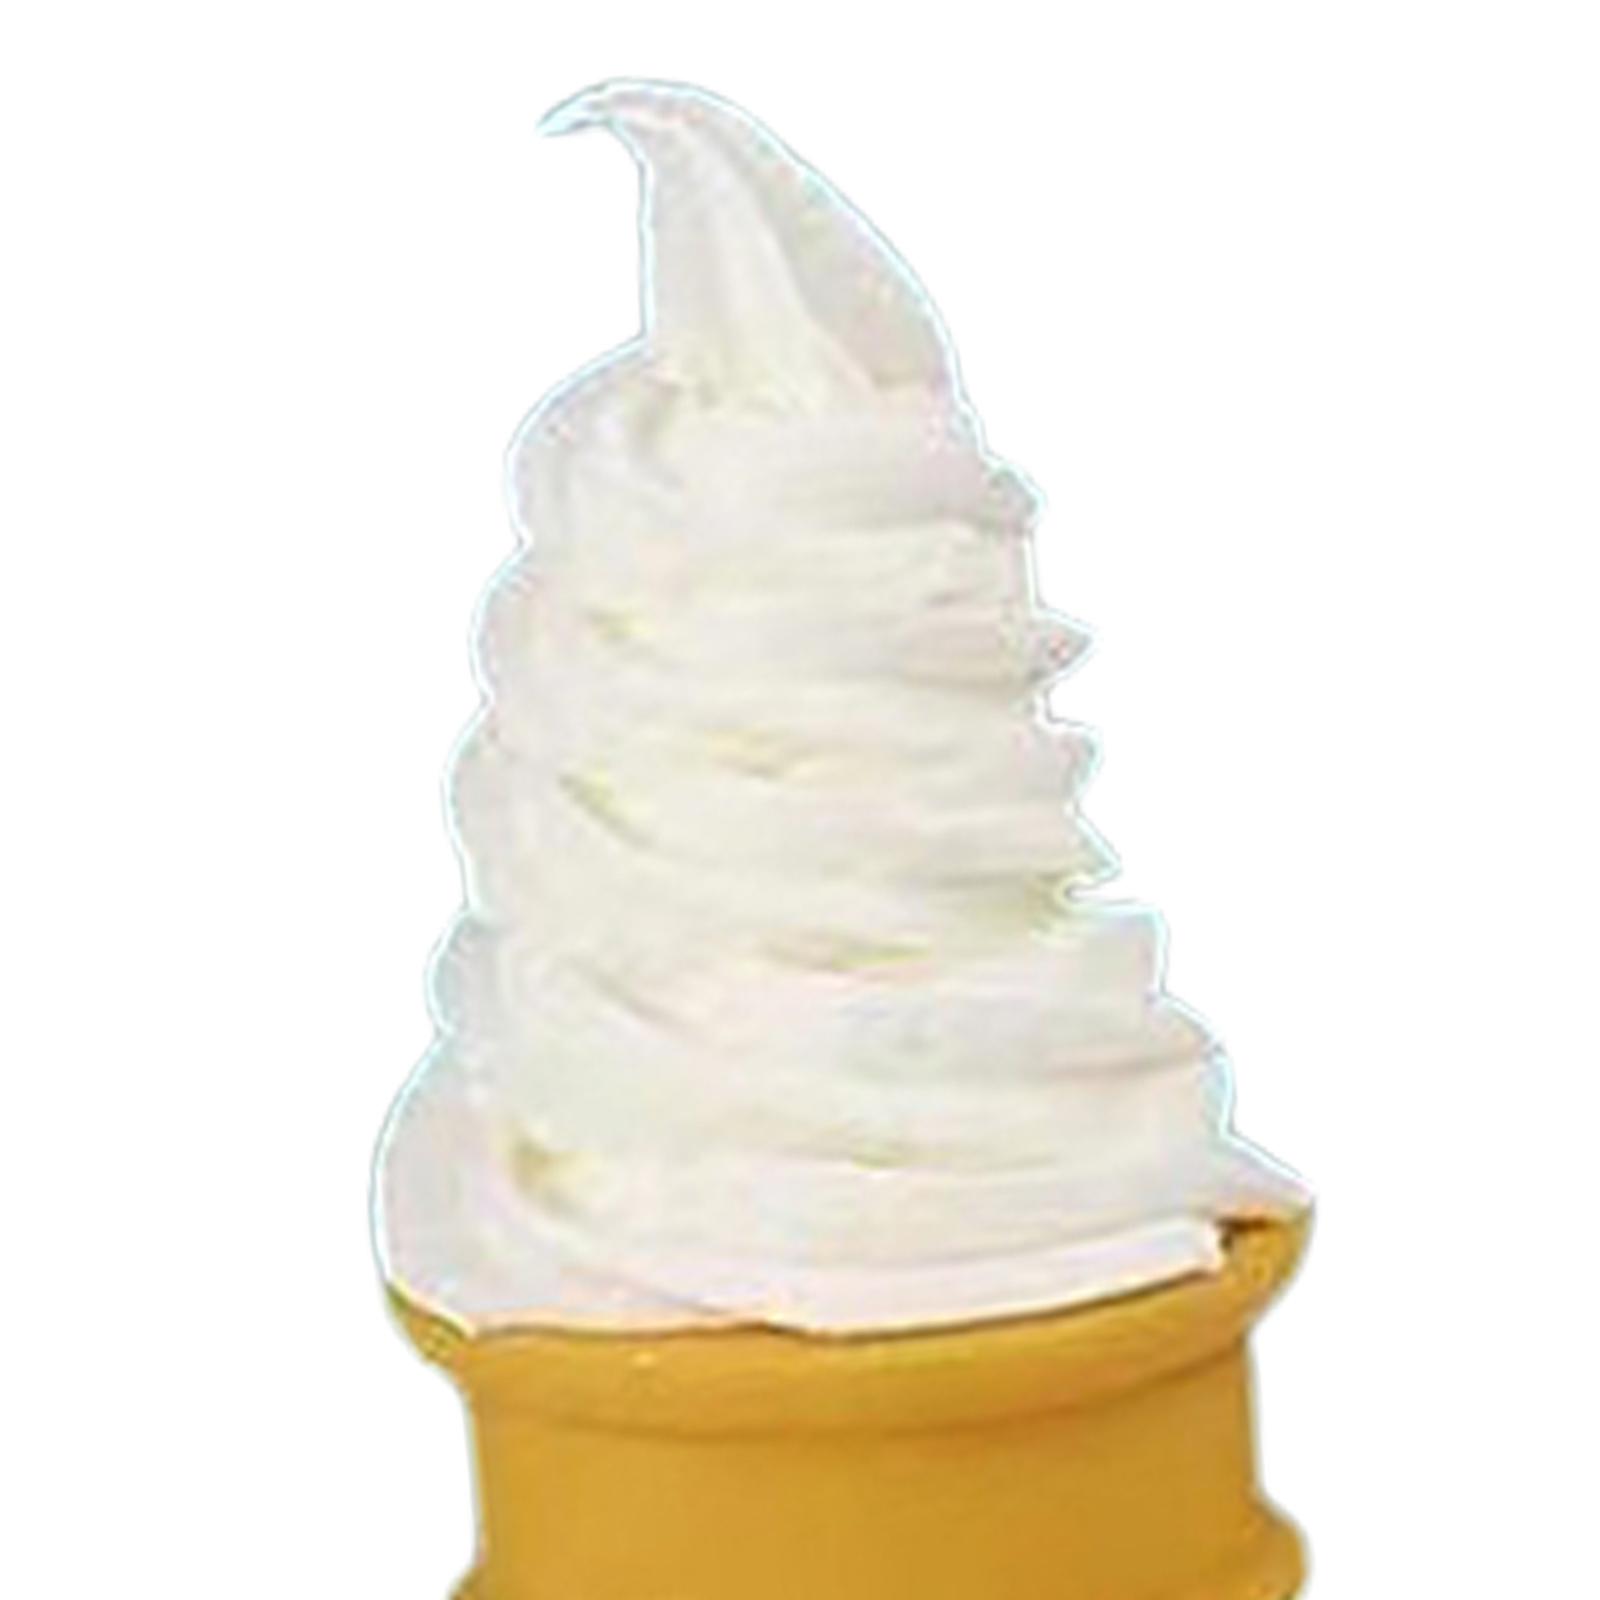 Fake Ice Cream Cone Food Model for Display Dessert Photo Props Desktop Decor White